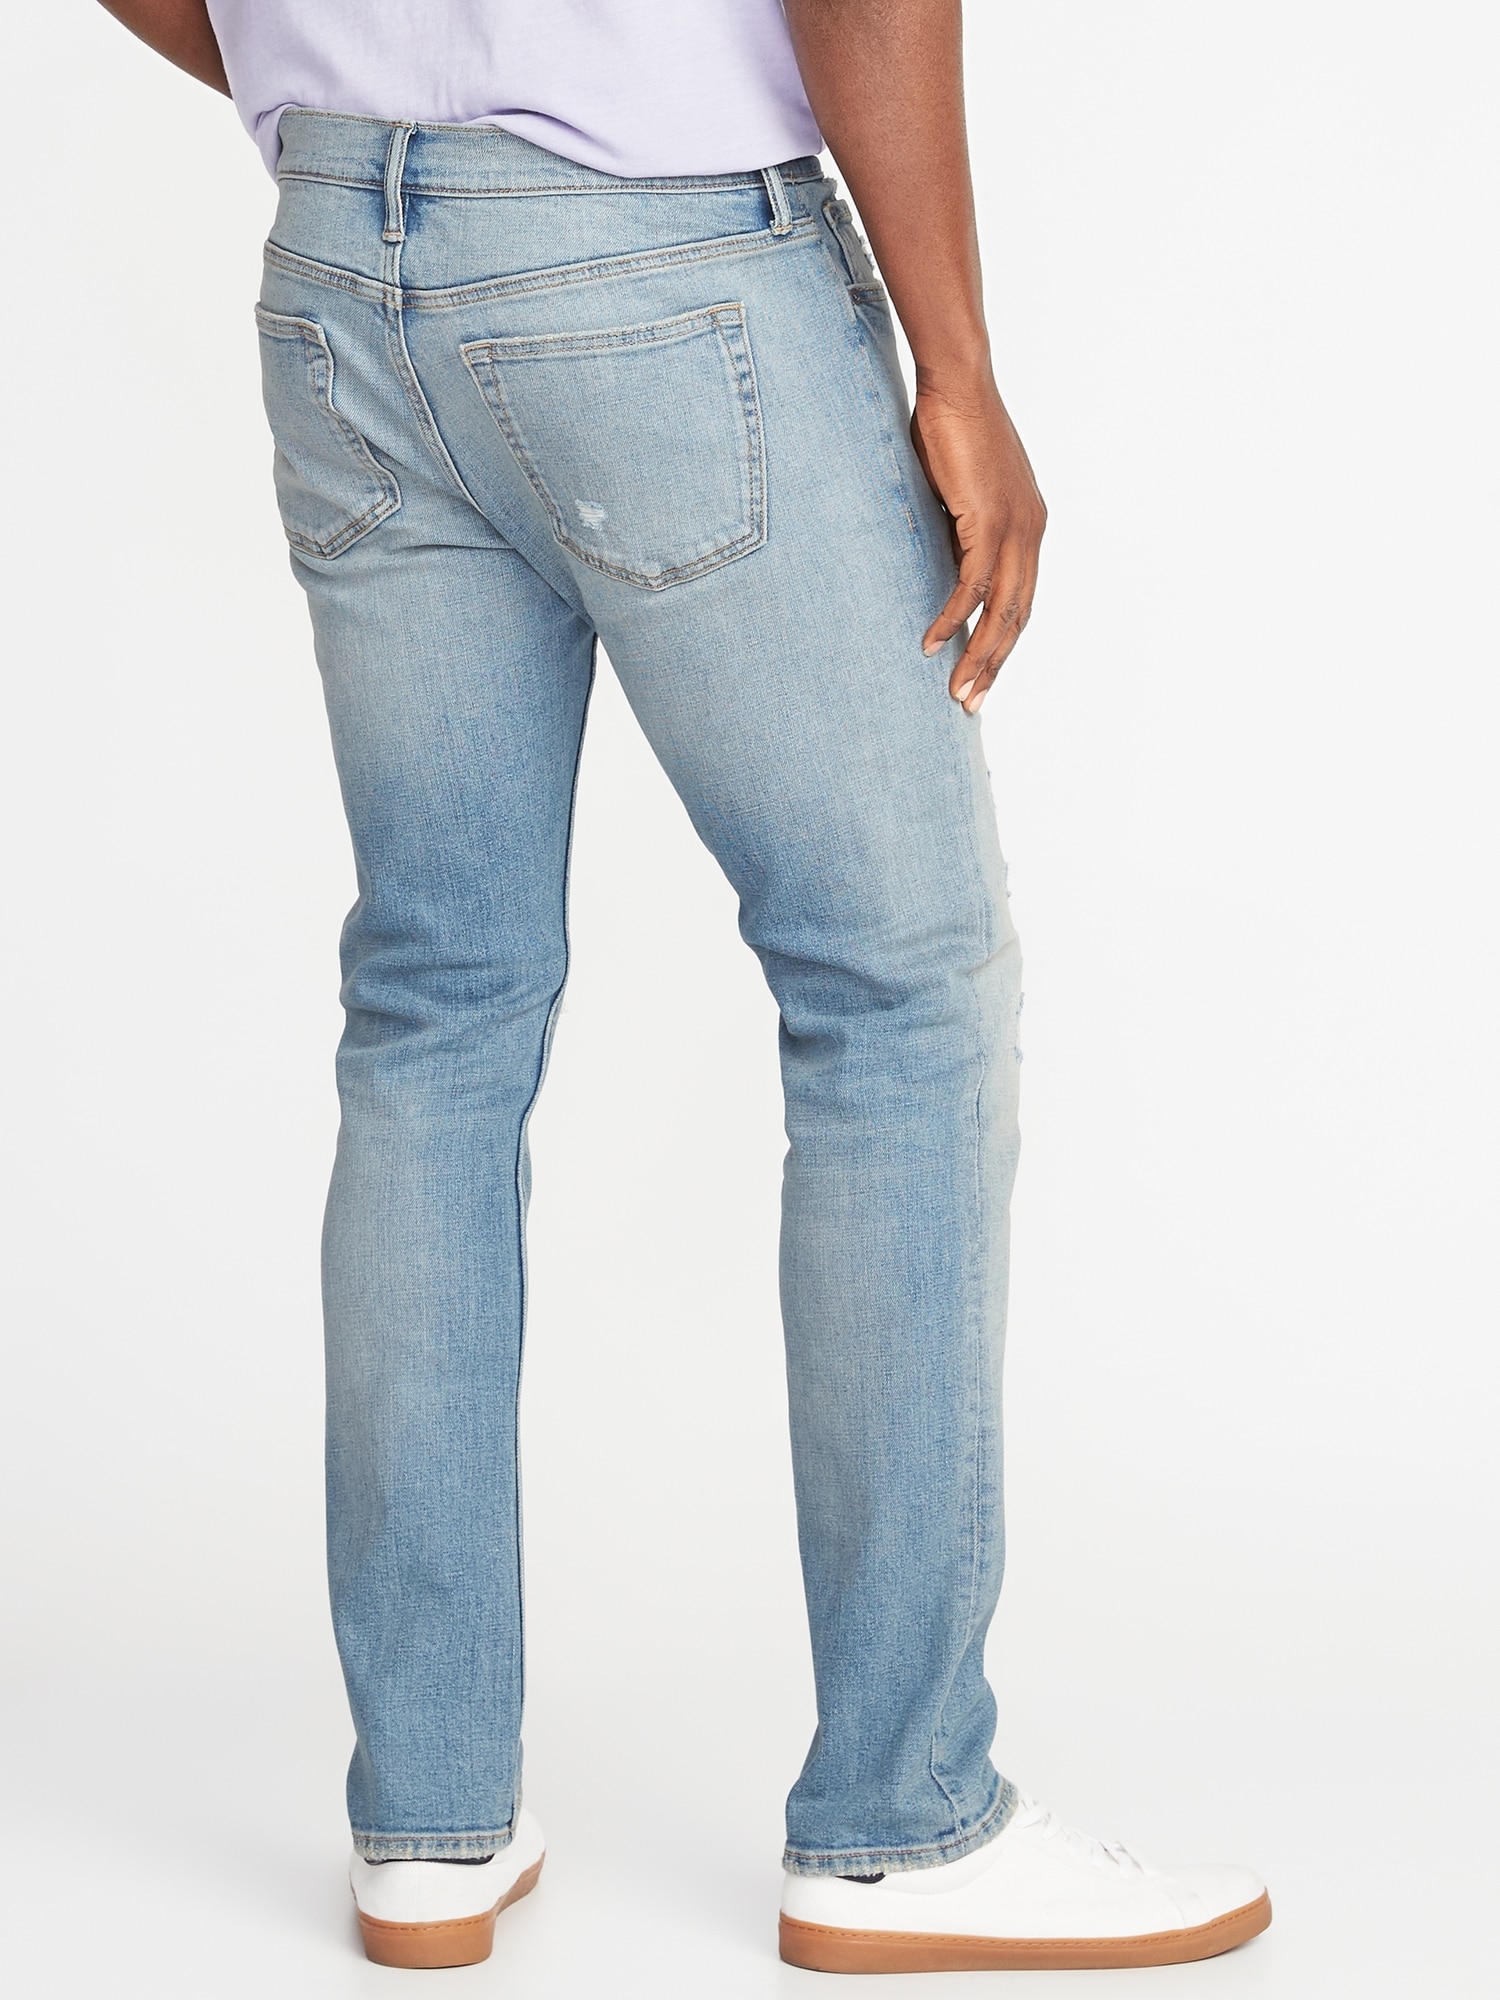 distressed skinny jeans mens